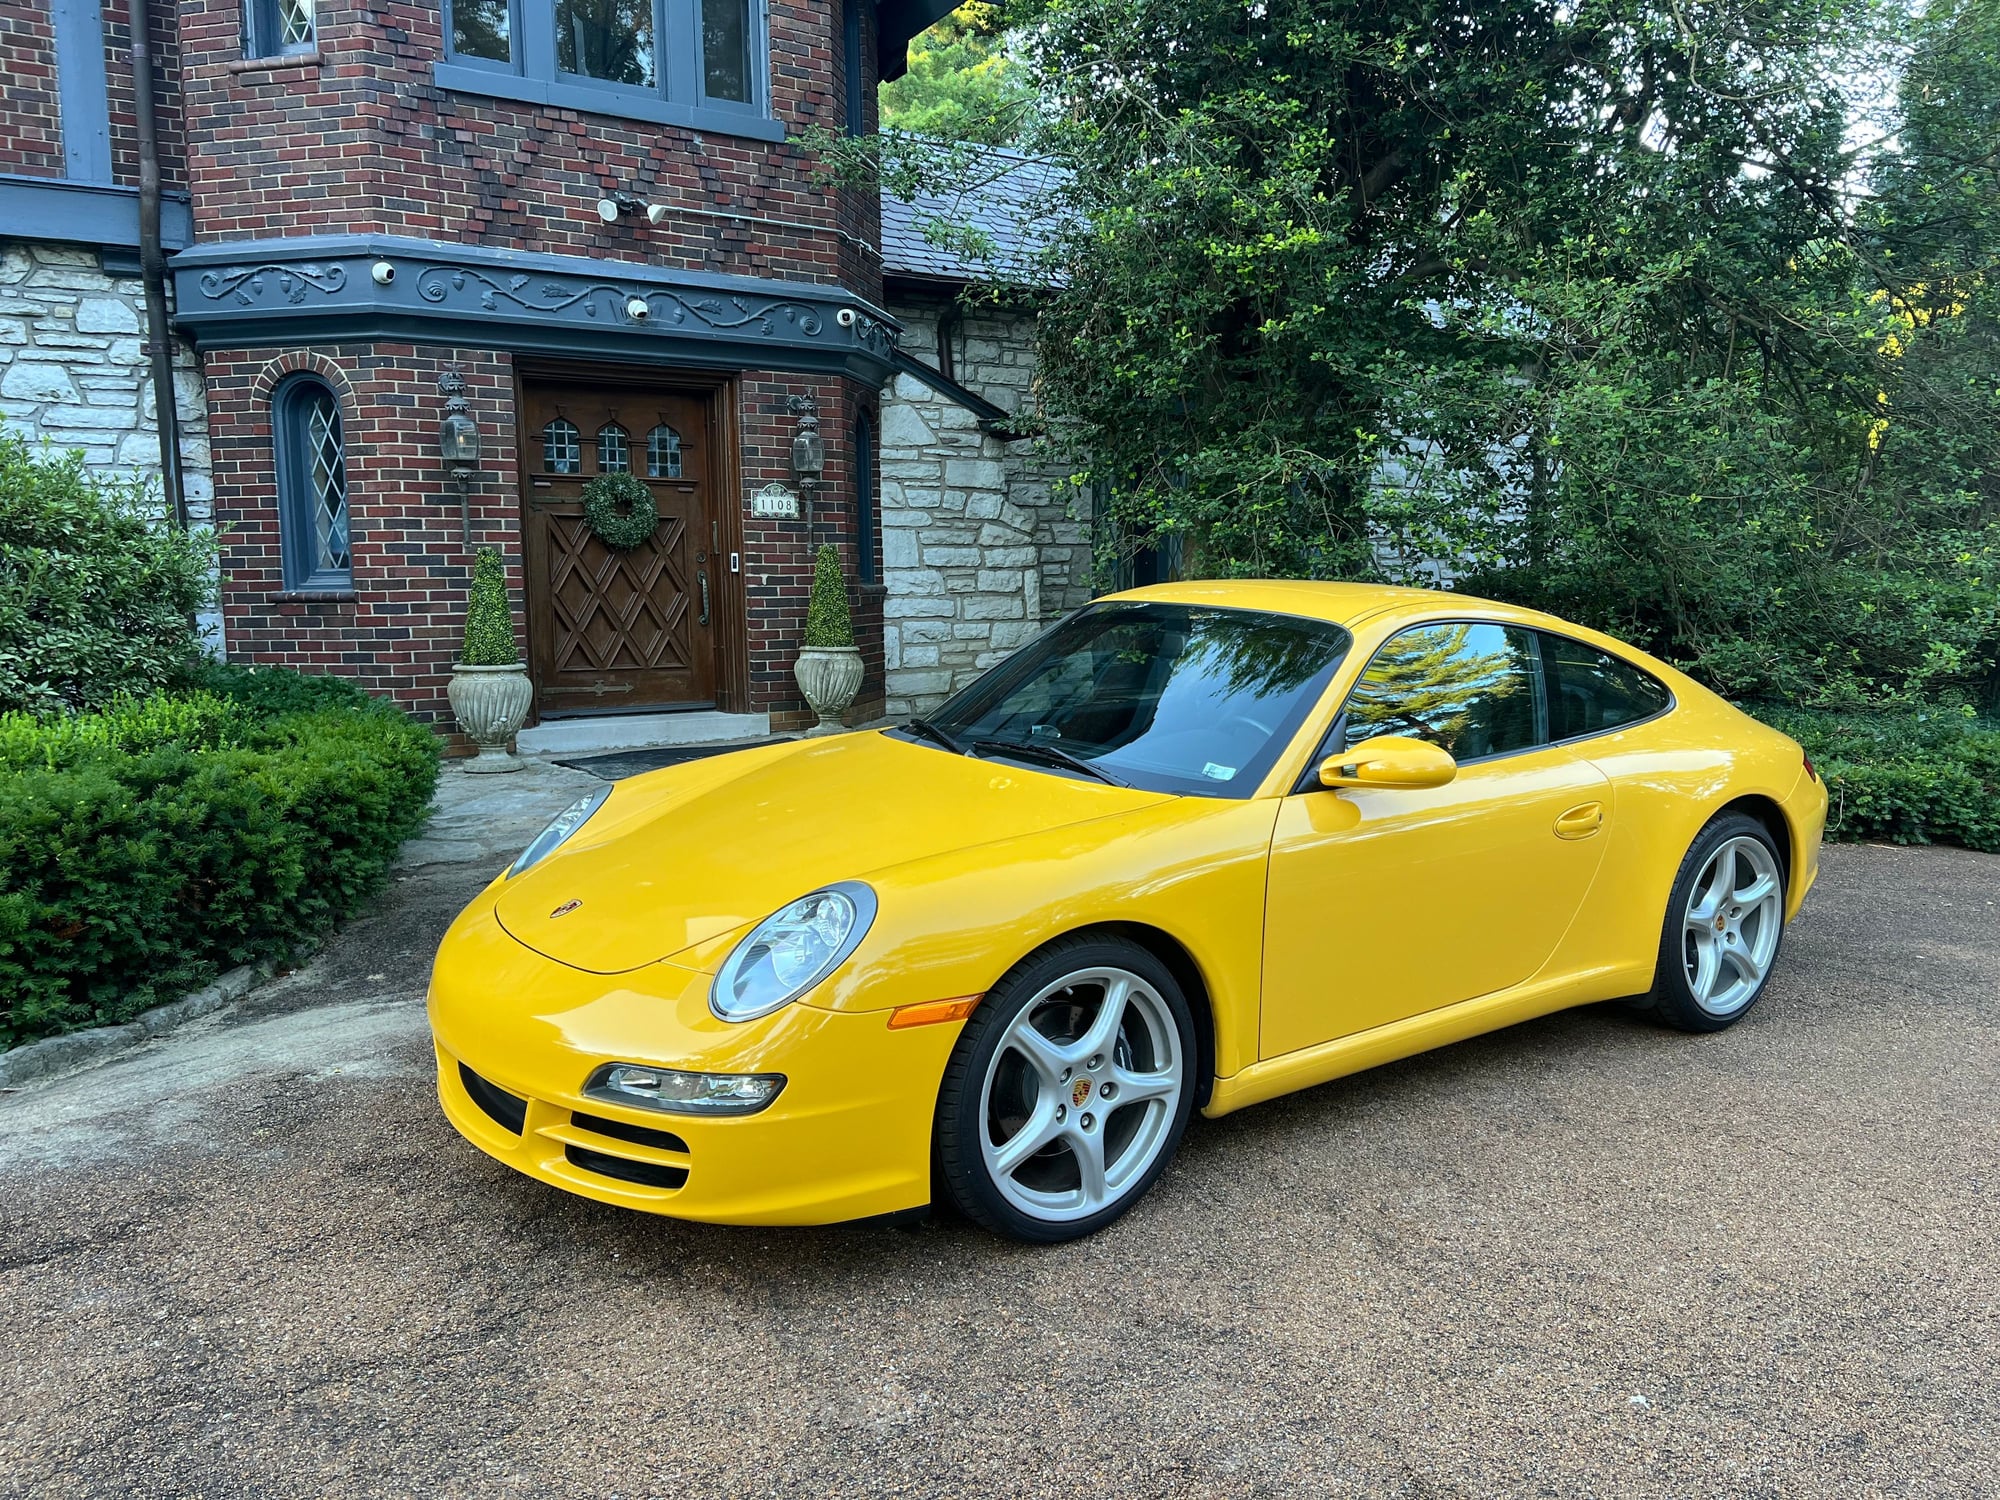 2007 Porsche 911 - 2007 Porsche Carrera - Used - St Louis, MO 63117, United States